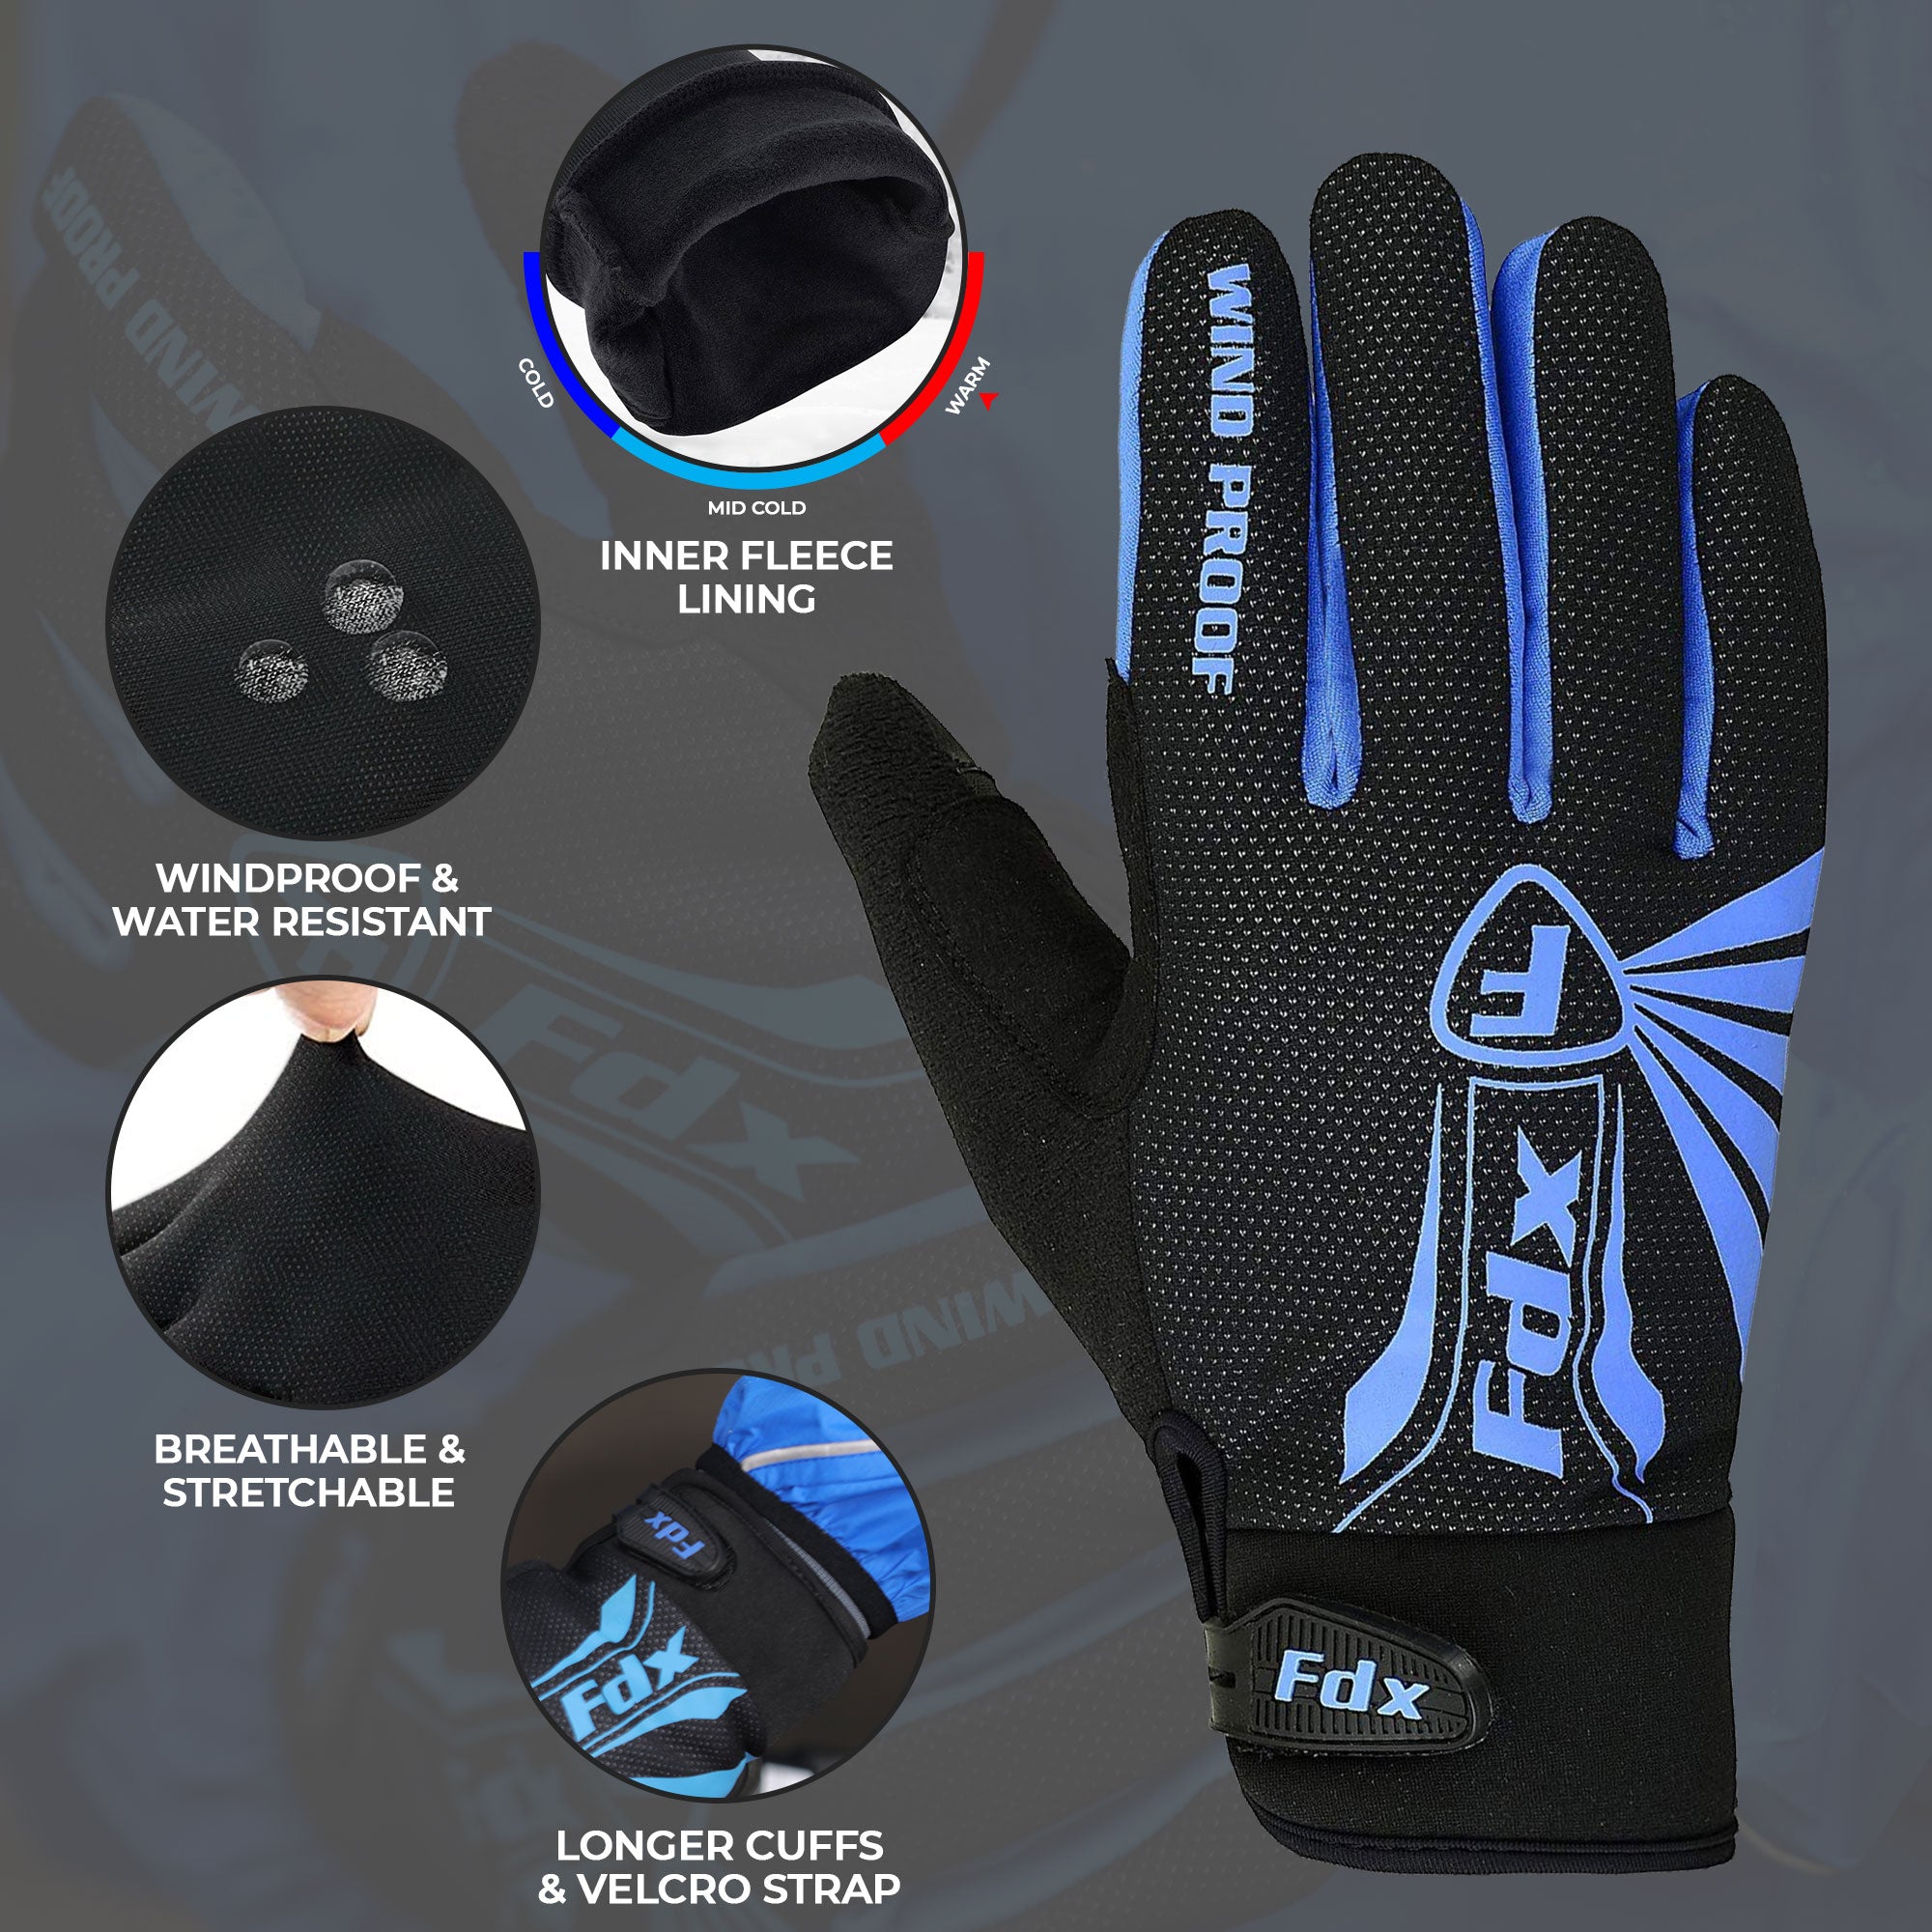 Fdx Zesto Blue Full Finger Winter Cycling Gloves